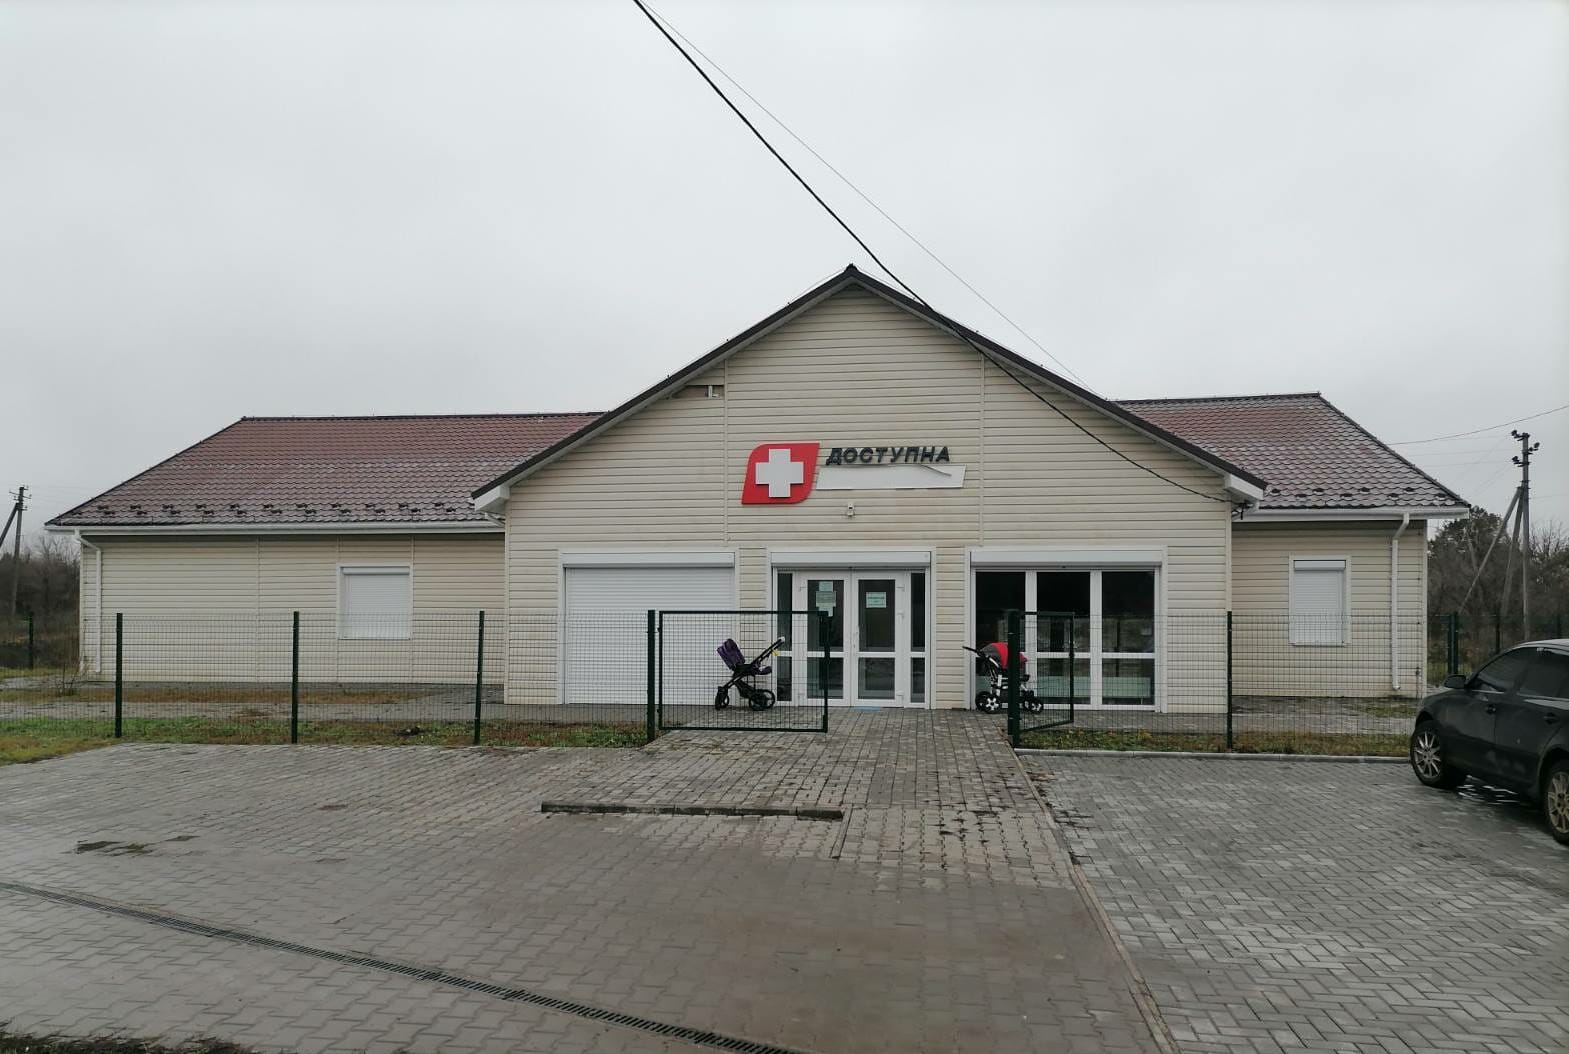 Mishkovo-Pohorilove outpatient healthcare centre.